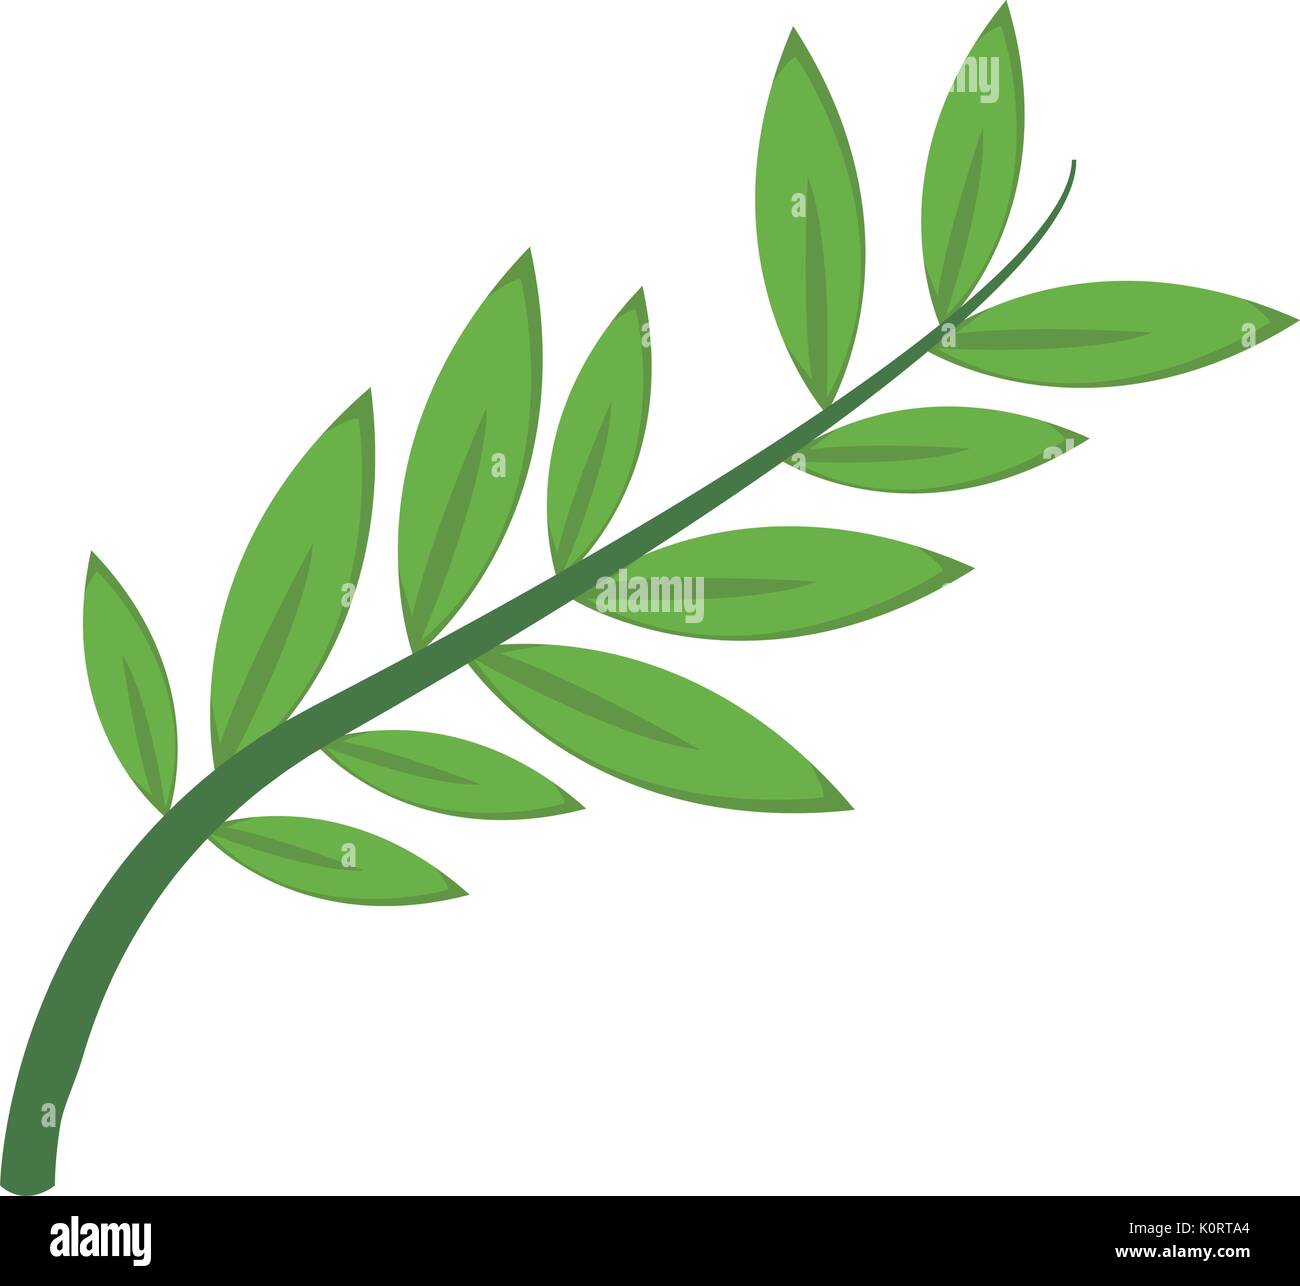 Rama de Olivo hojas flora símbolo de paz Imagen Vector de stock - Alamy